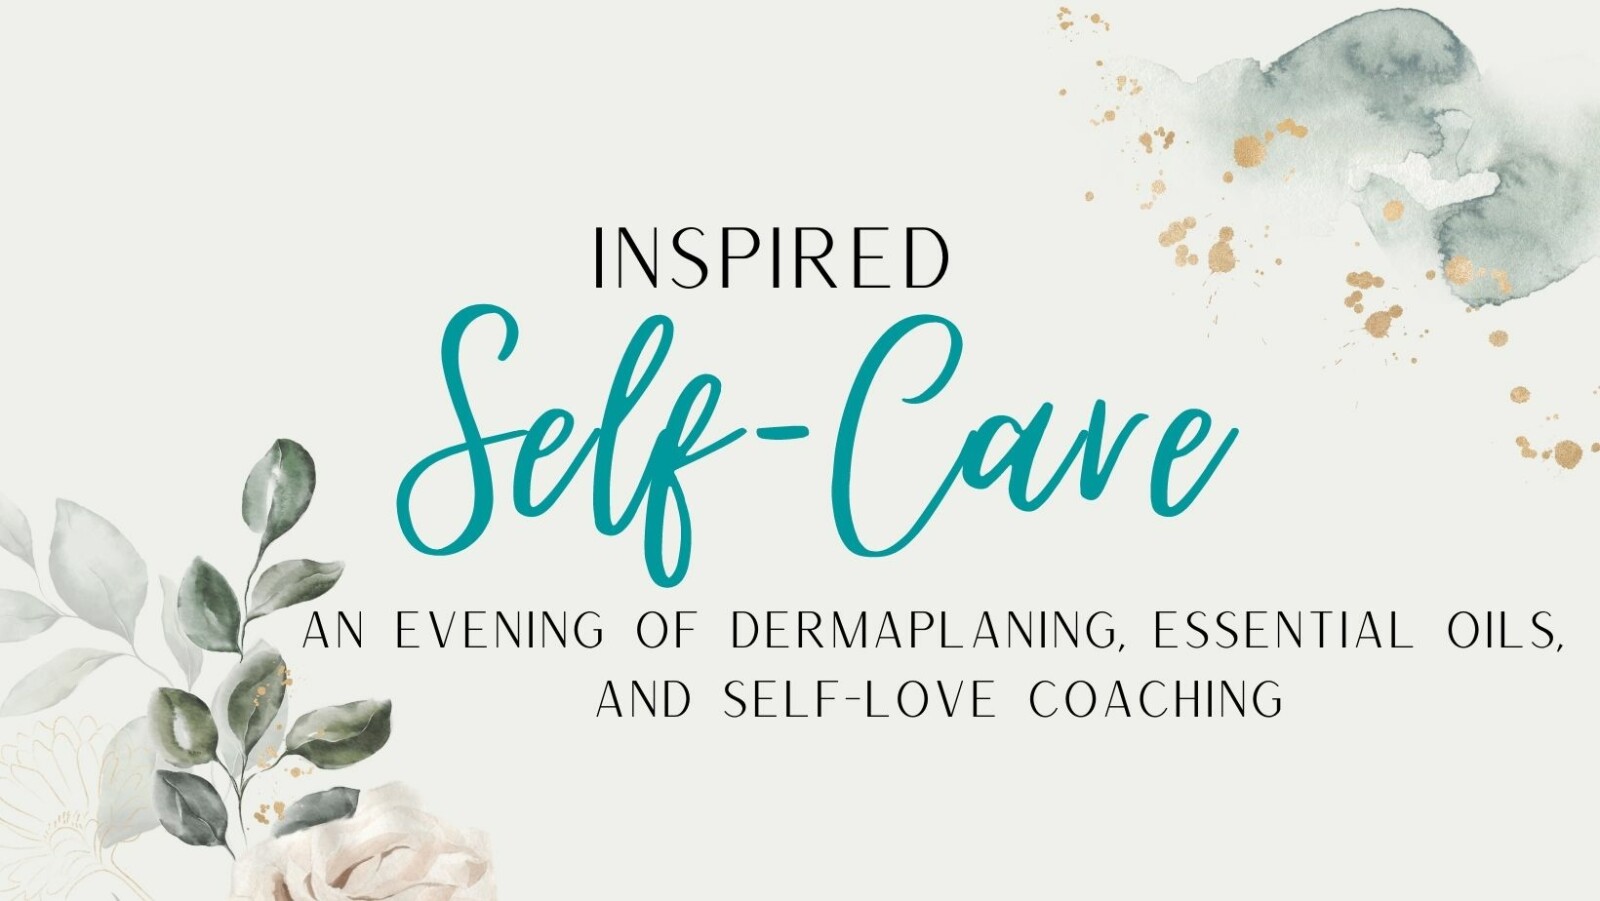 Inspired Self-Care Dec 12th